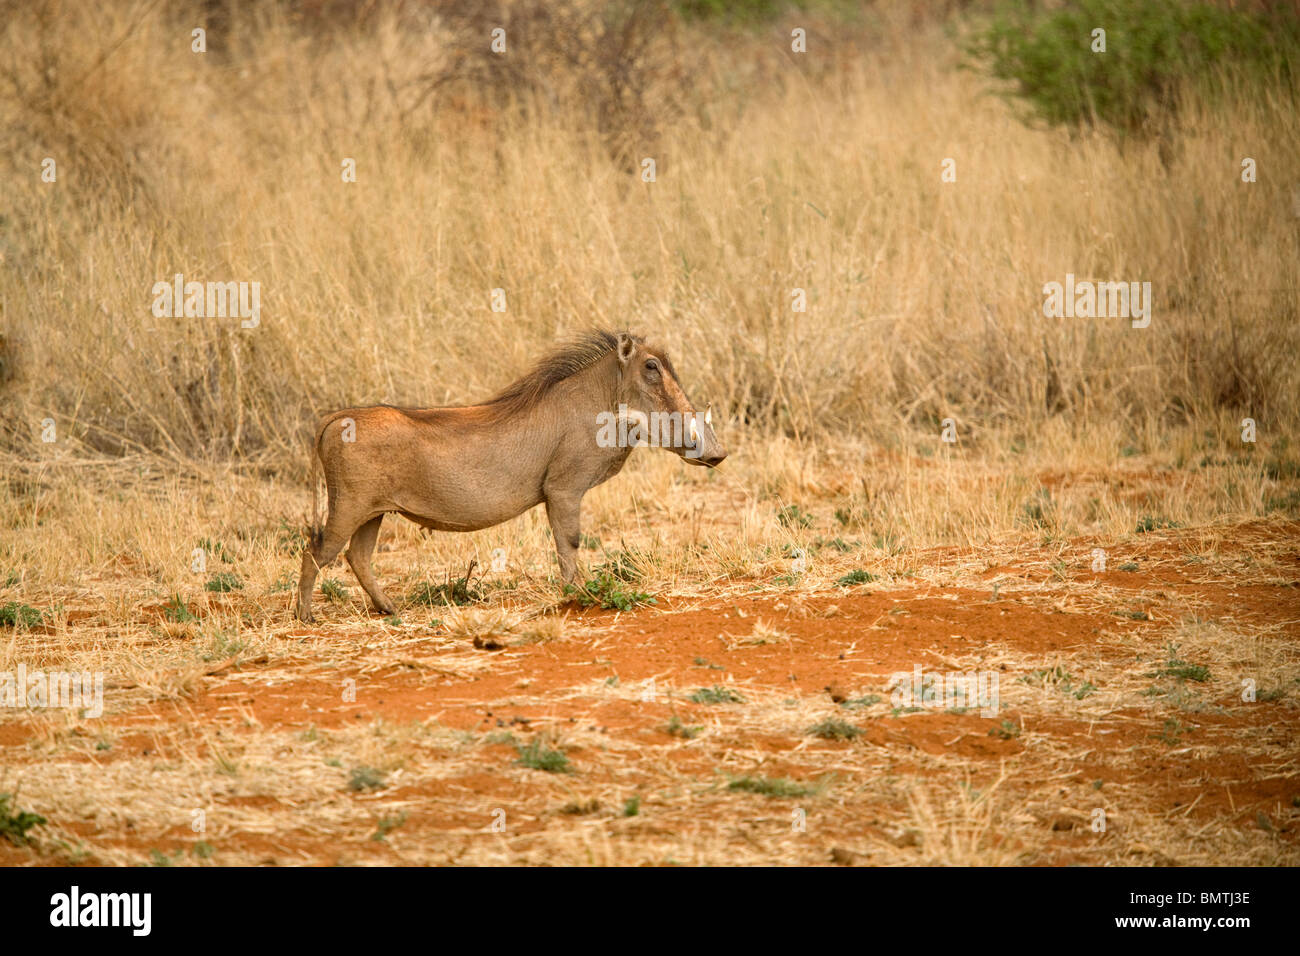 Warthog in its natural environment, Namibia Stock Photo